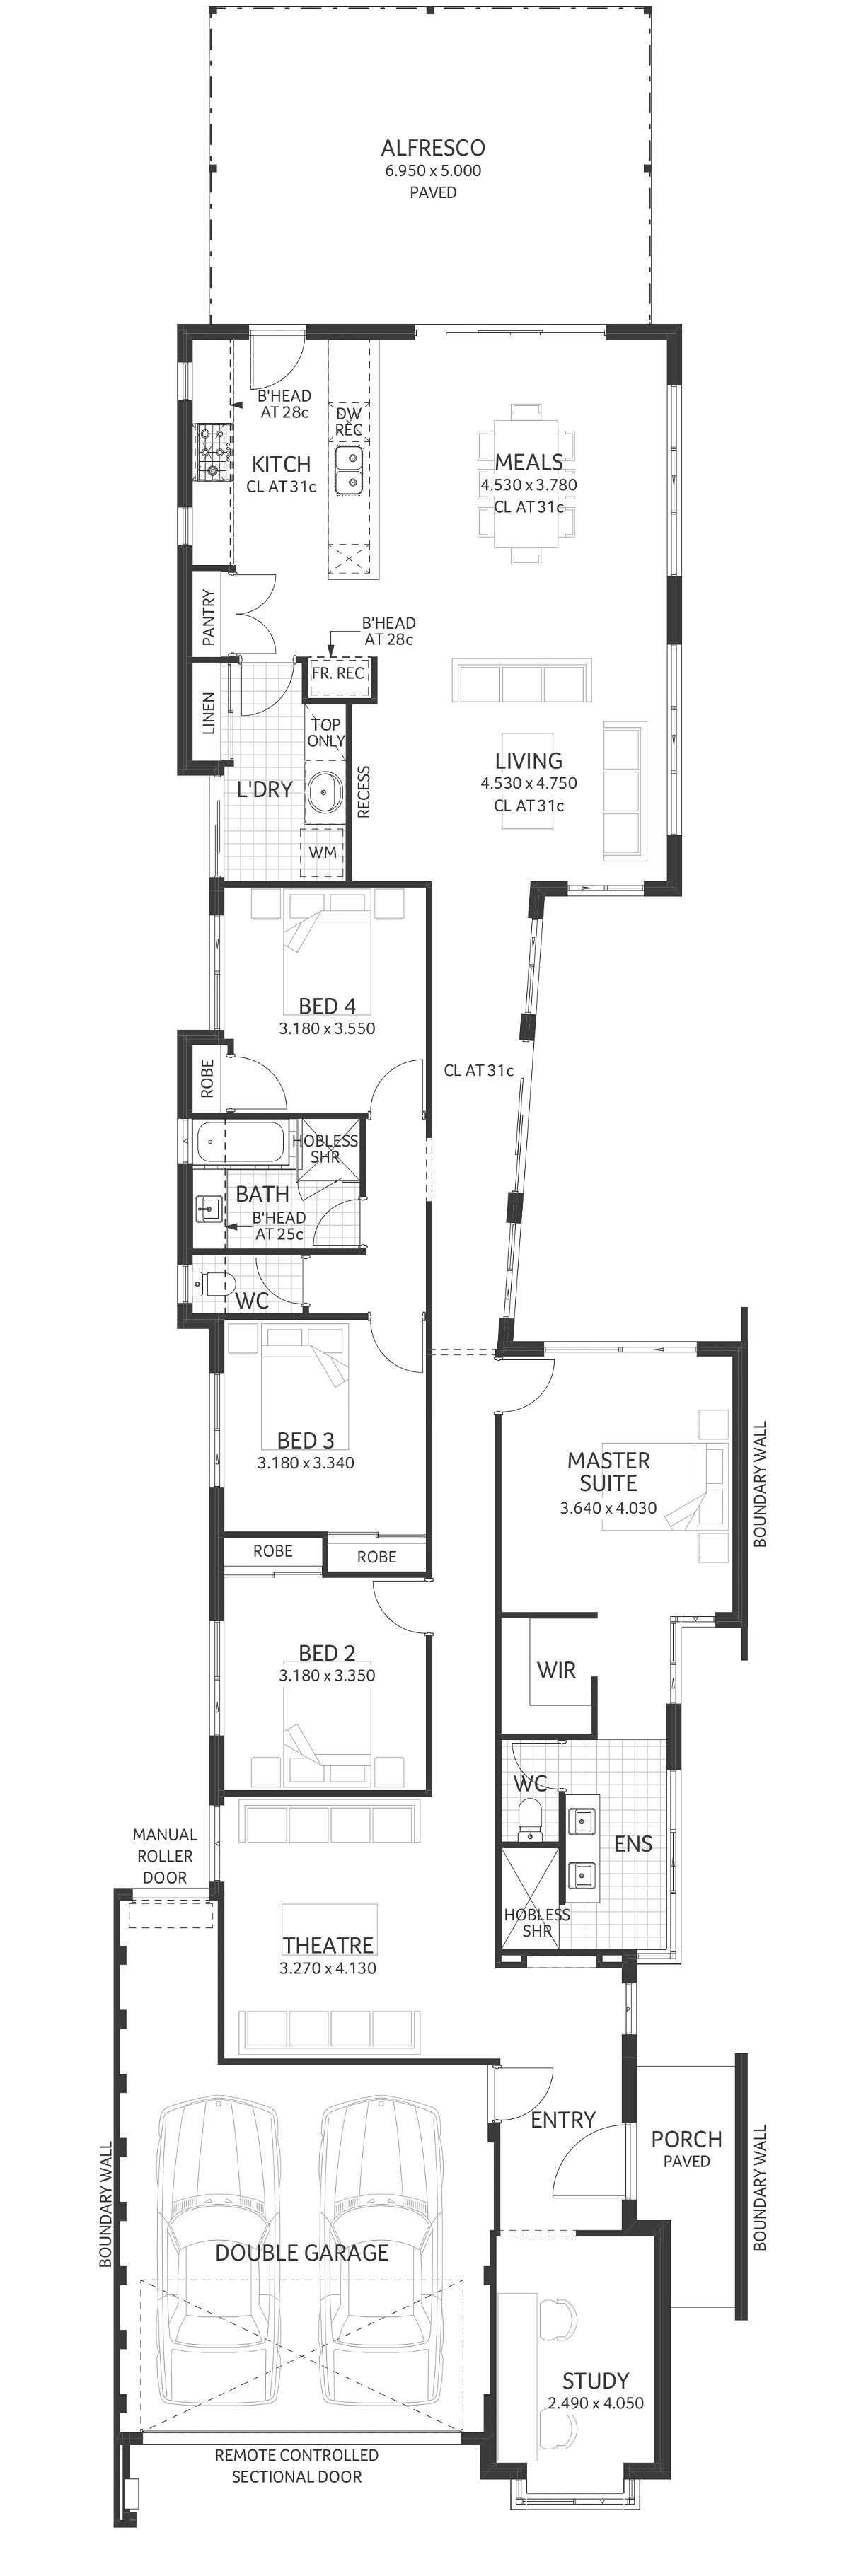 Plunkett Homes - Ardross | Federation - Floorplan - Ardross Luxe Federation Marketing Plan Croppedjpg